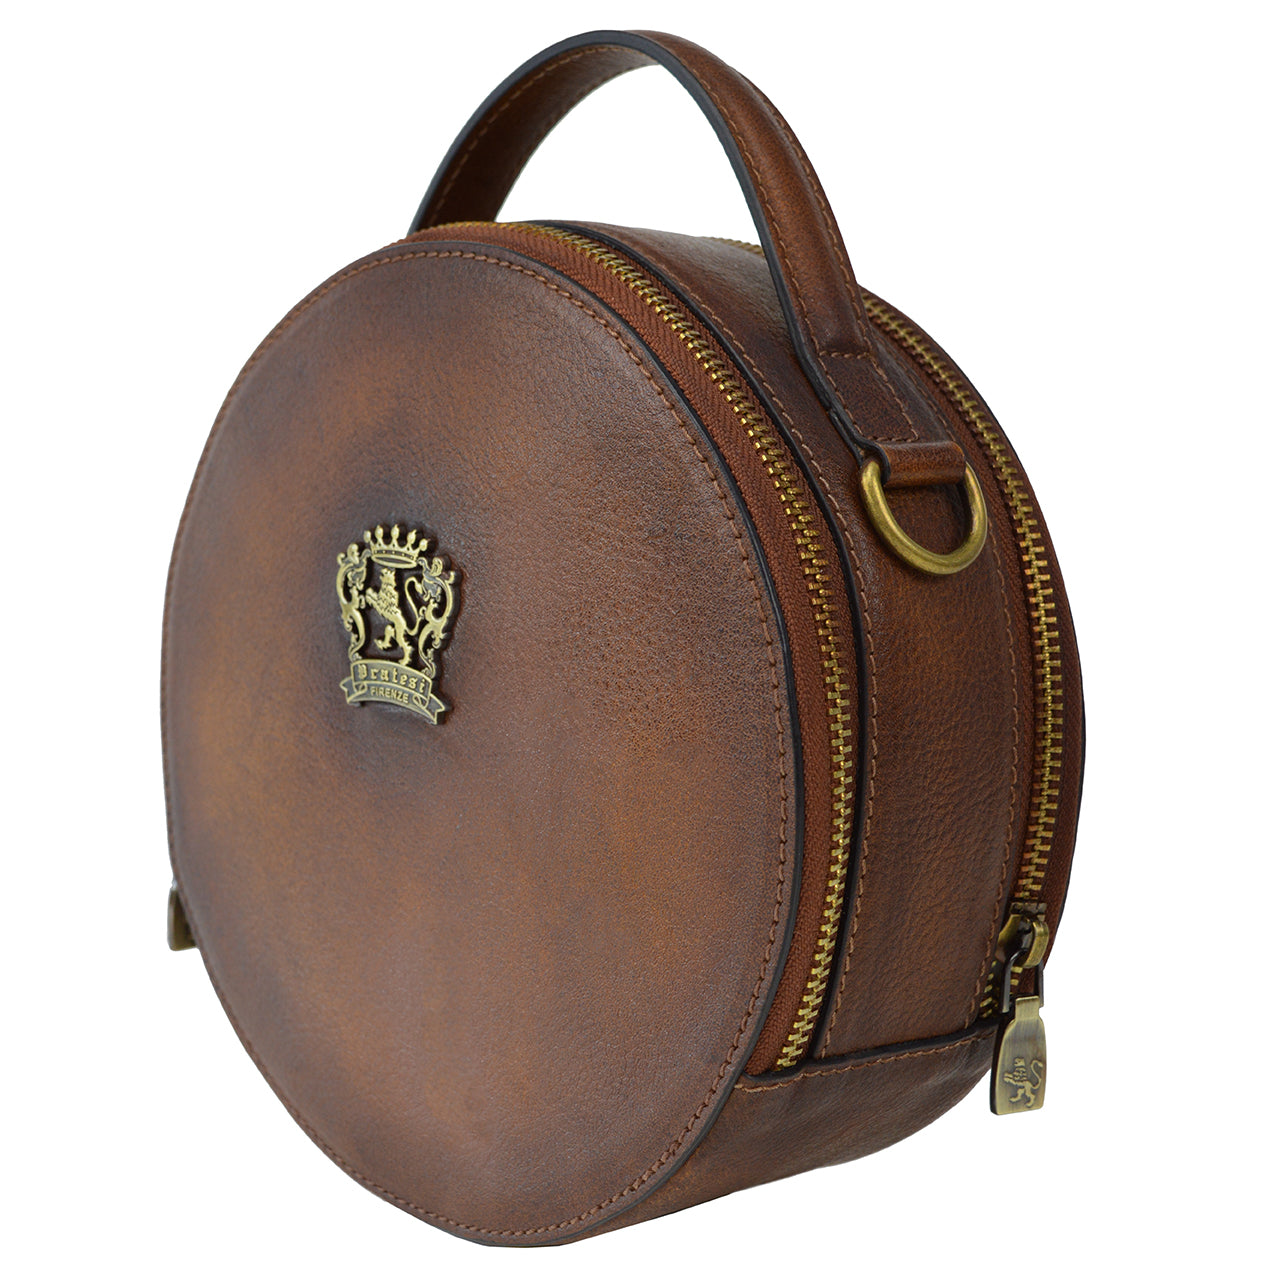 Pratesi Troghi B188 Tote Bag in genuine Italian leather - Troghi B188 Mustard